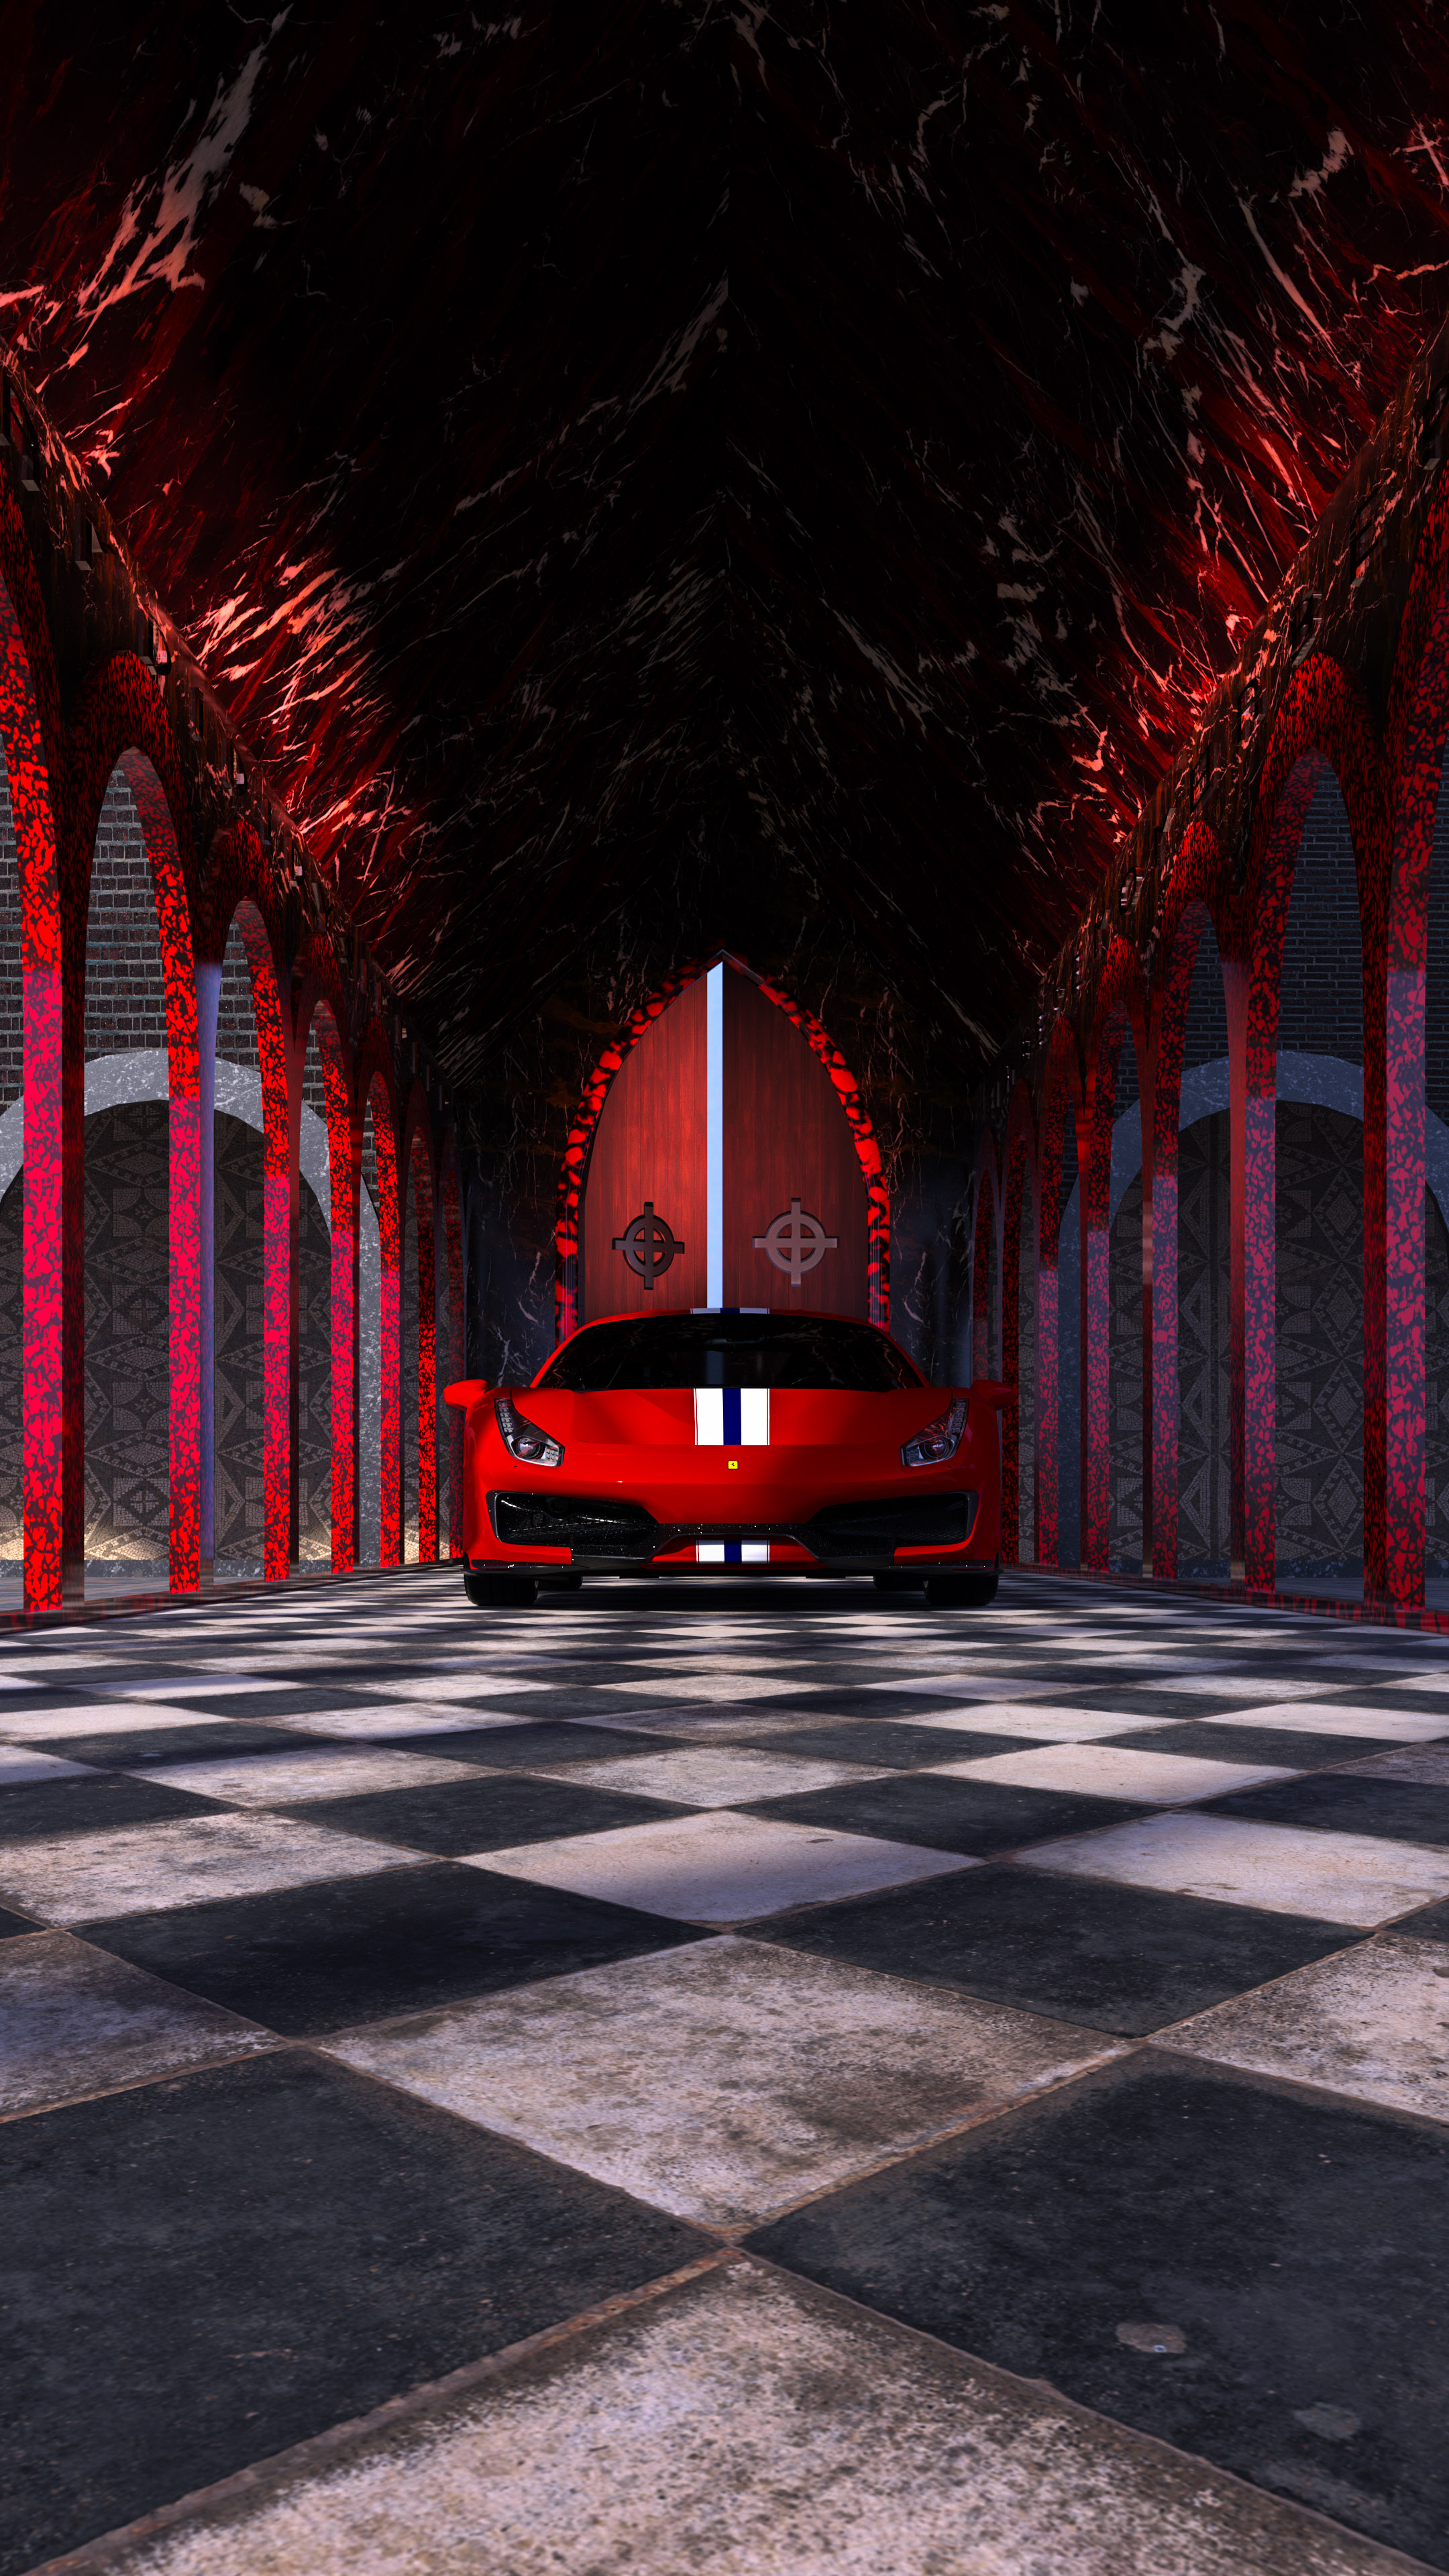 iphone wallpaper of Ferrari 488 red car in 4K Ultra HD resolution